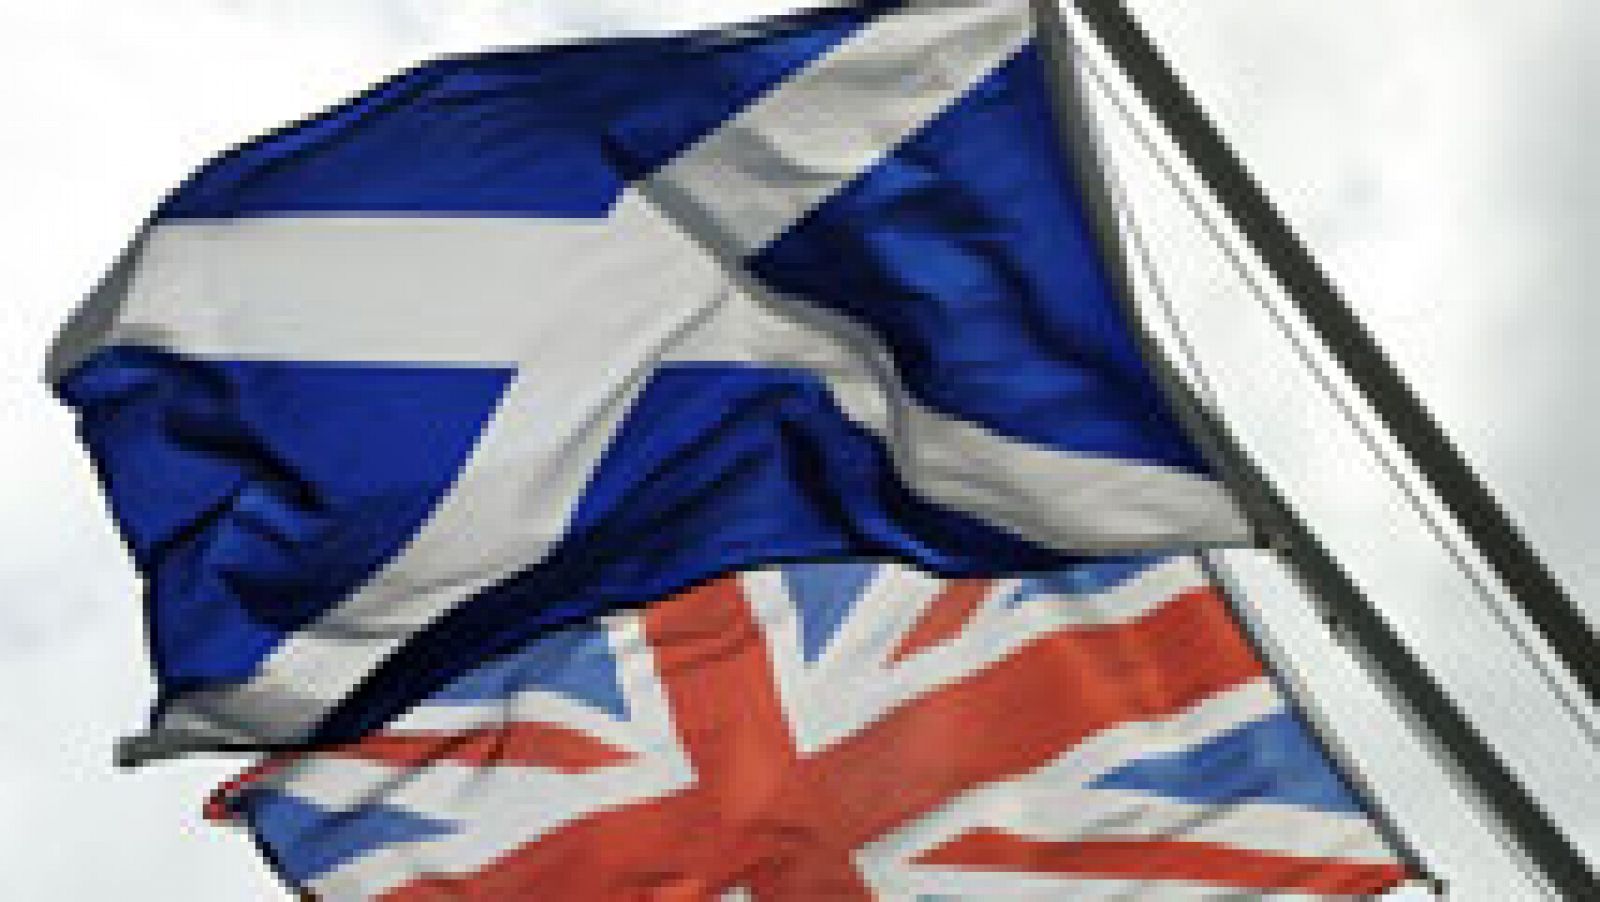  Escocia vota en un referéndum histórico si se independiza del Reino Unido